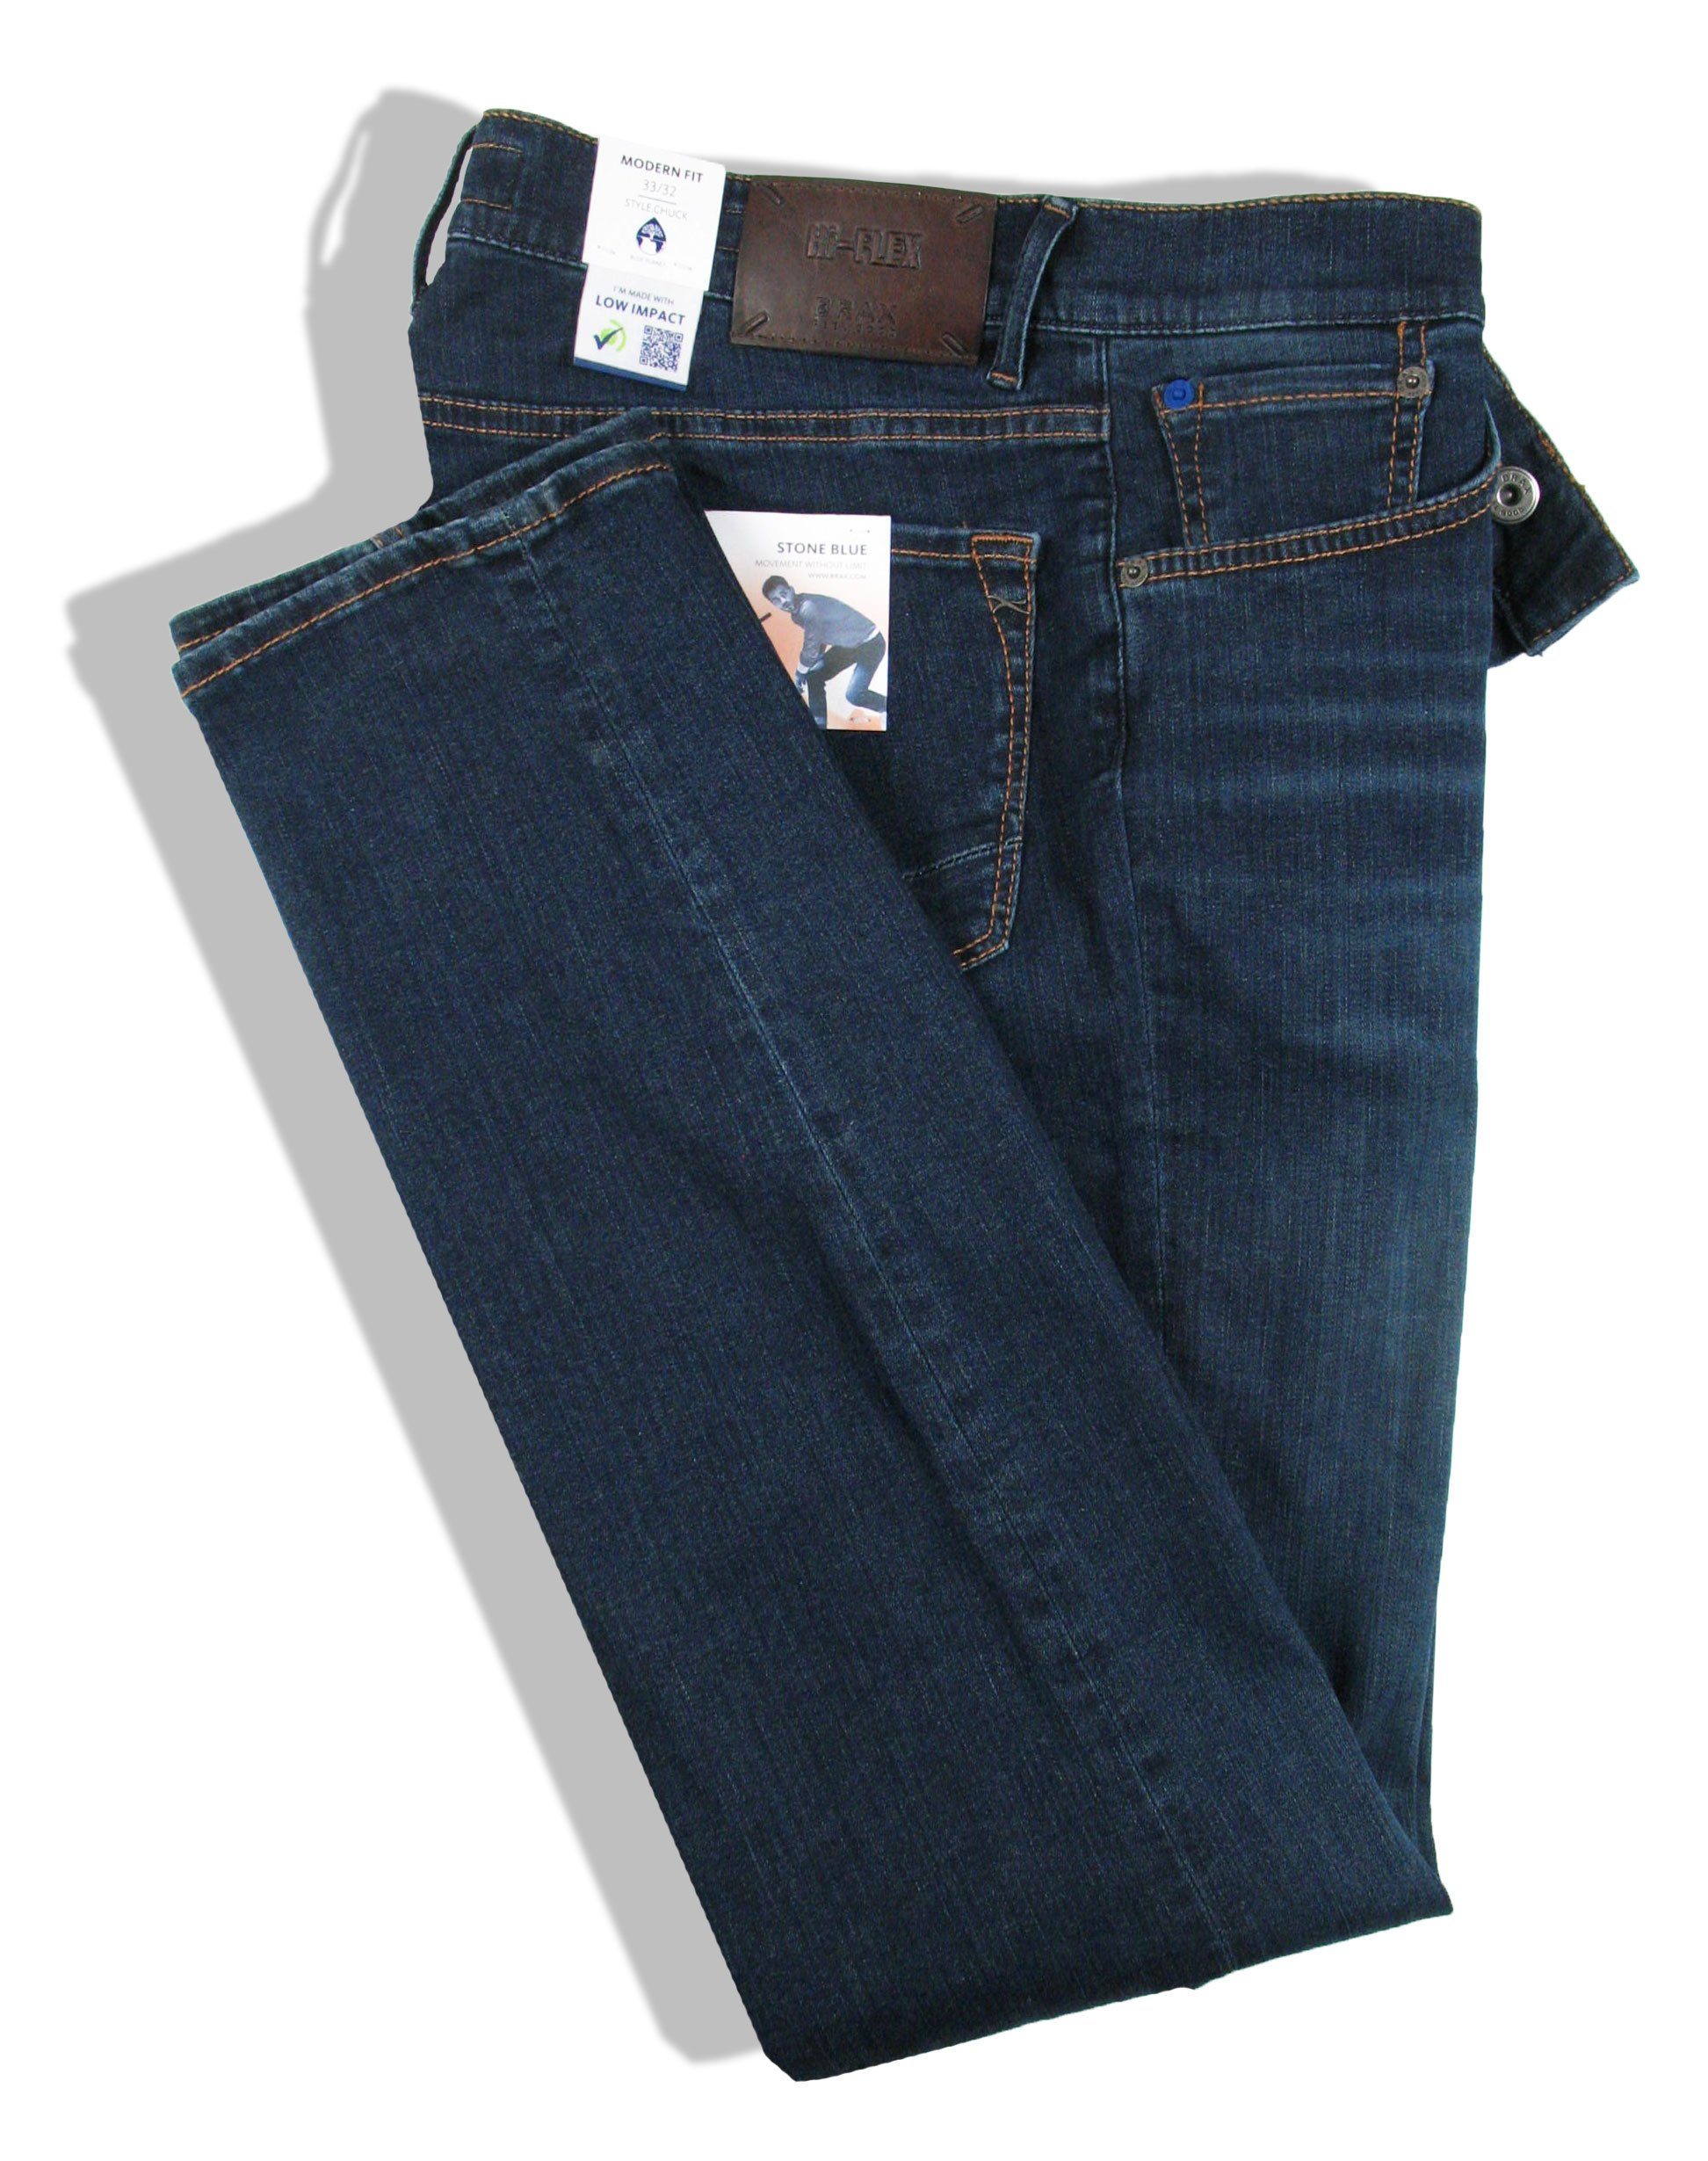 Hi-FLEX Style Denim Brax stone used blue 5-Pocket-Jeans CHUCK